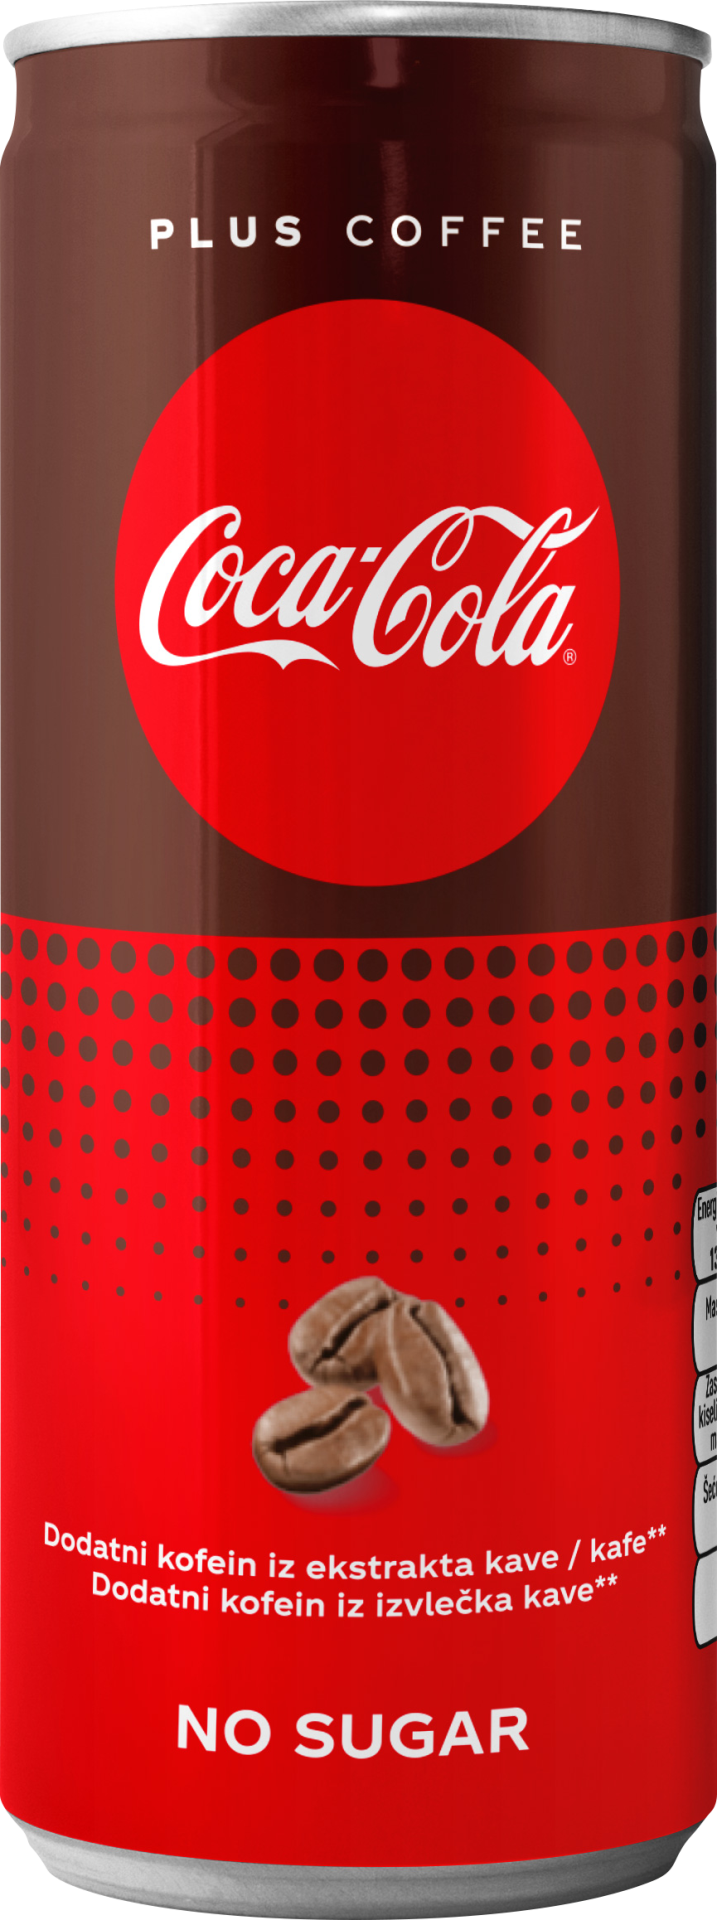 Coca-Cola predstavila gazirano piće s kofeinom - Coca-Cola PLUS COFFEE